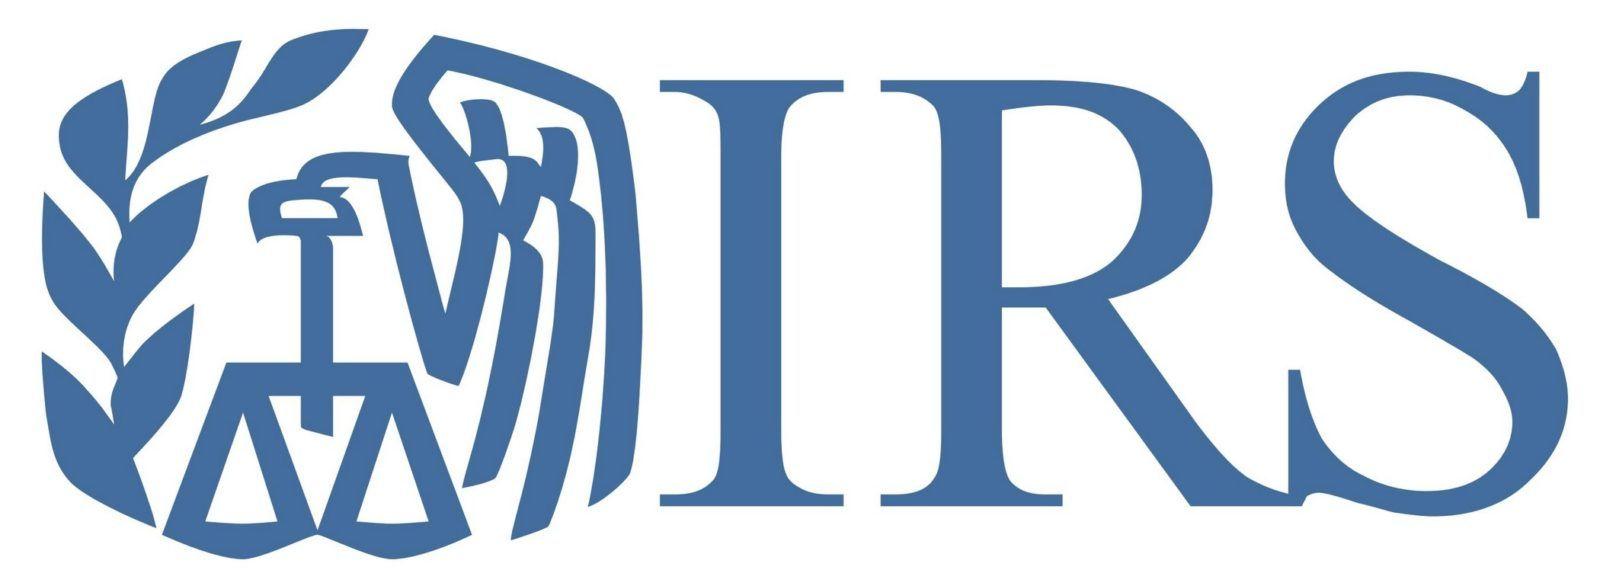 IRS Logo - Irs Logo. BFBA, LLP